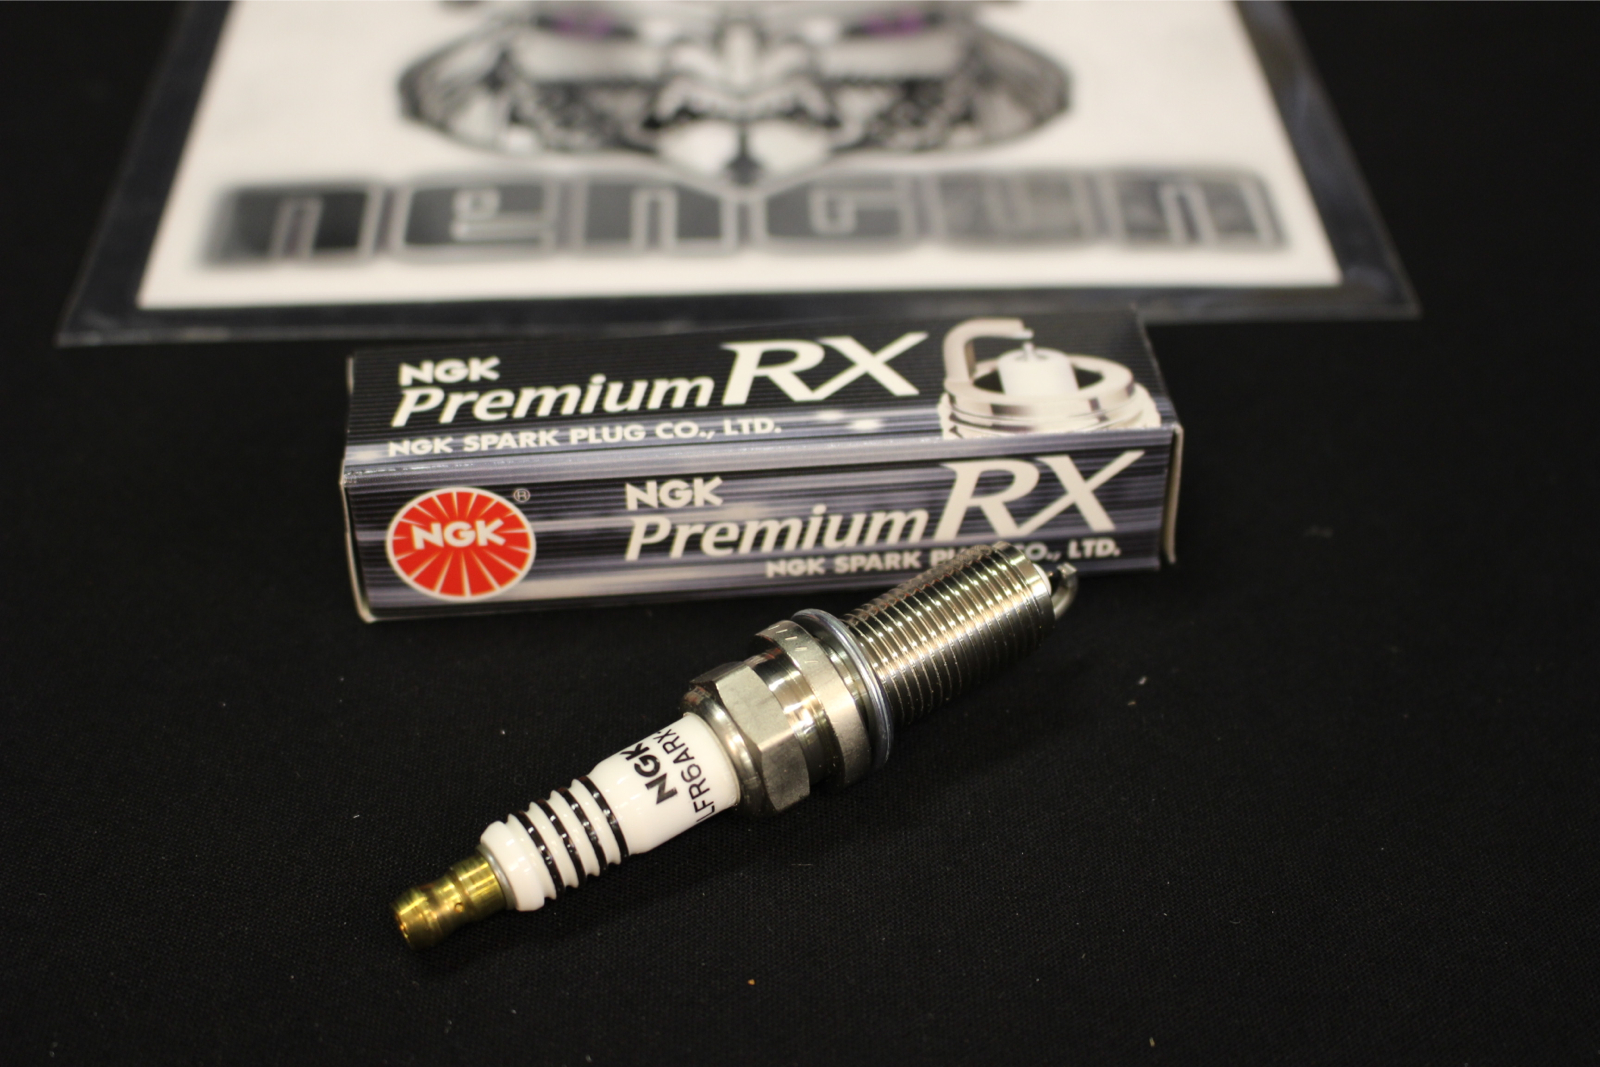 NGK - Premium RX Spark Plugs